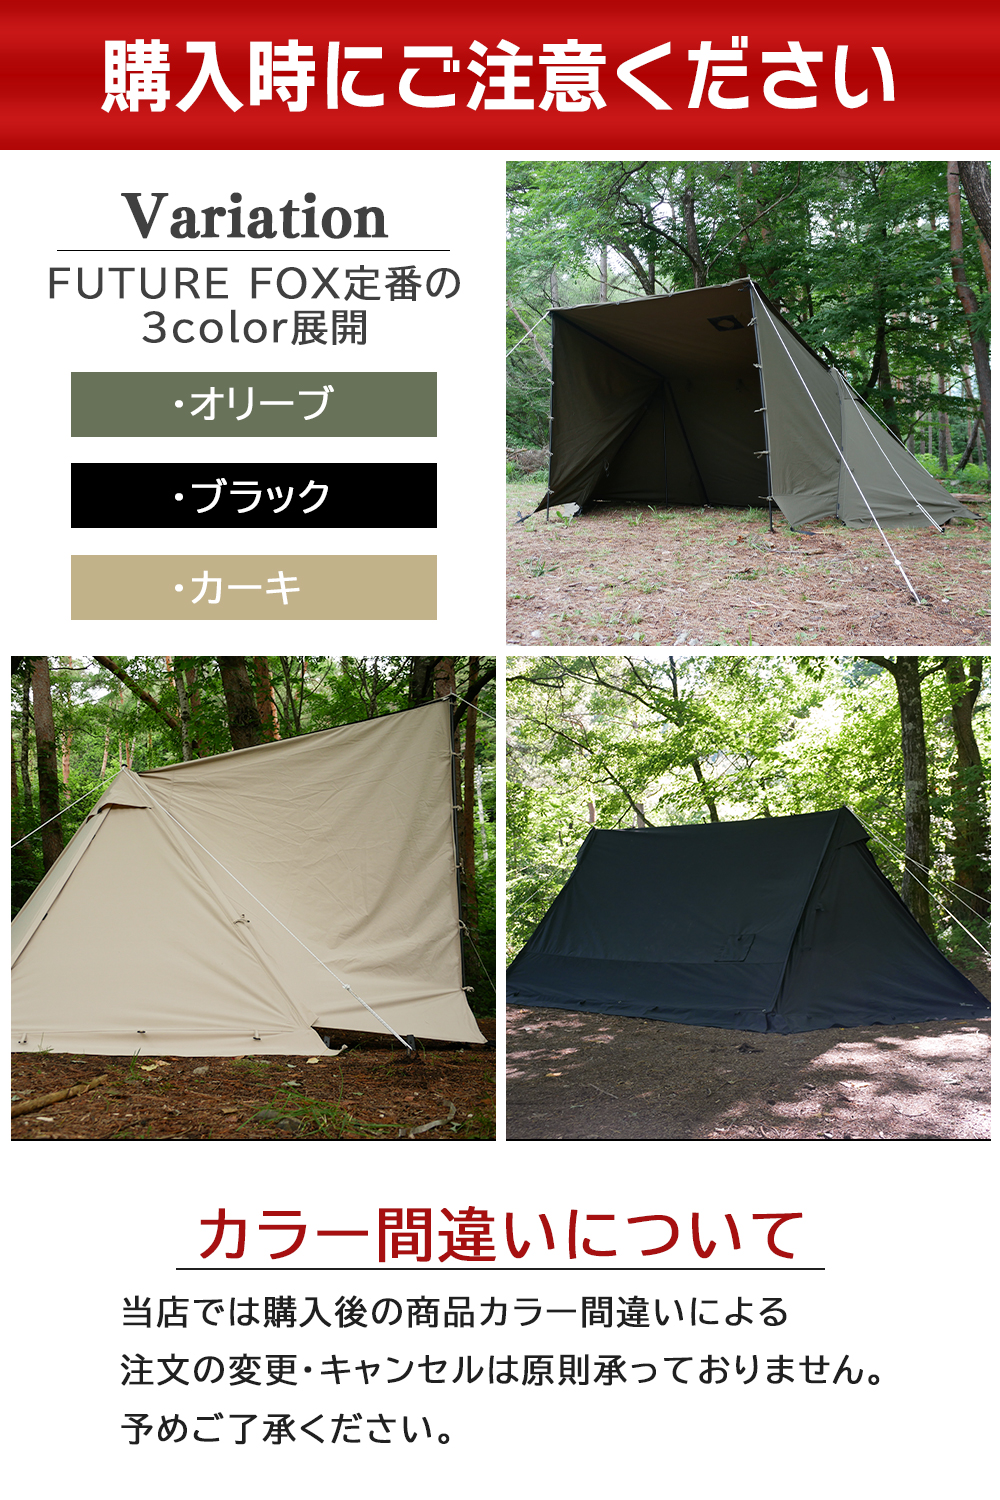 FUTURE FOX パップテント FOX-BASE EVO TC 軍幕 テント ソロテント